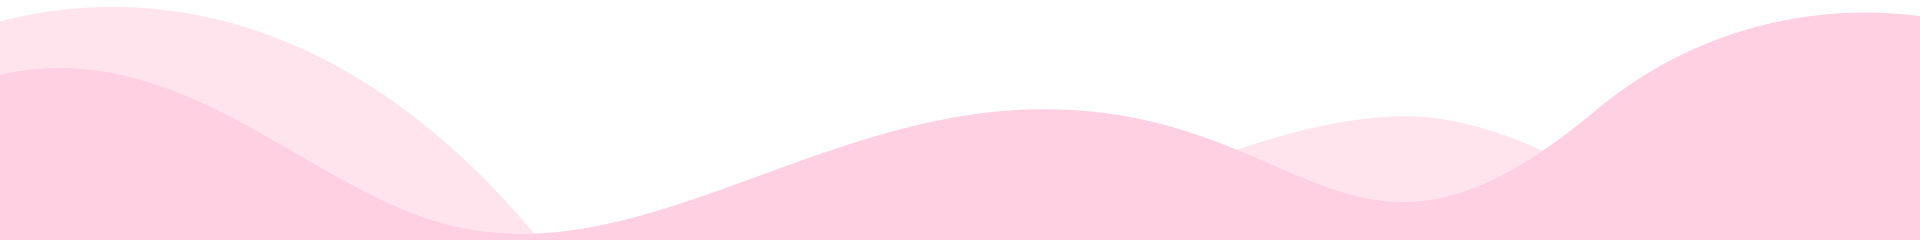 pink_bottom_wave_01